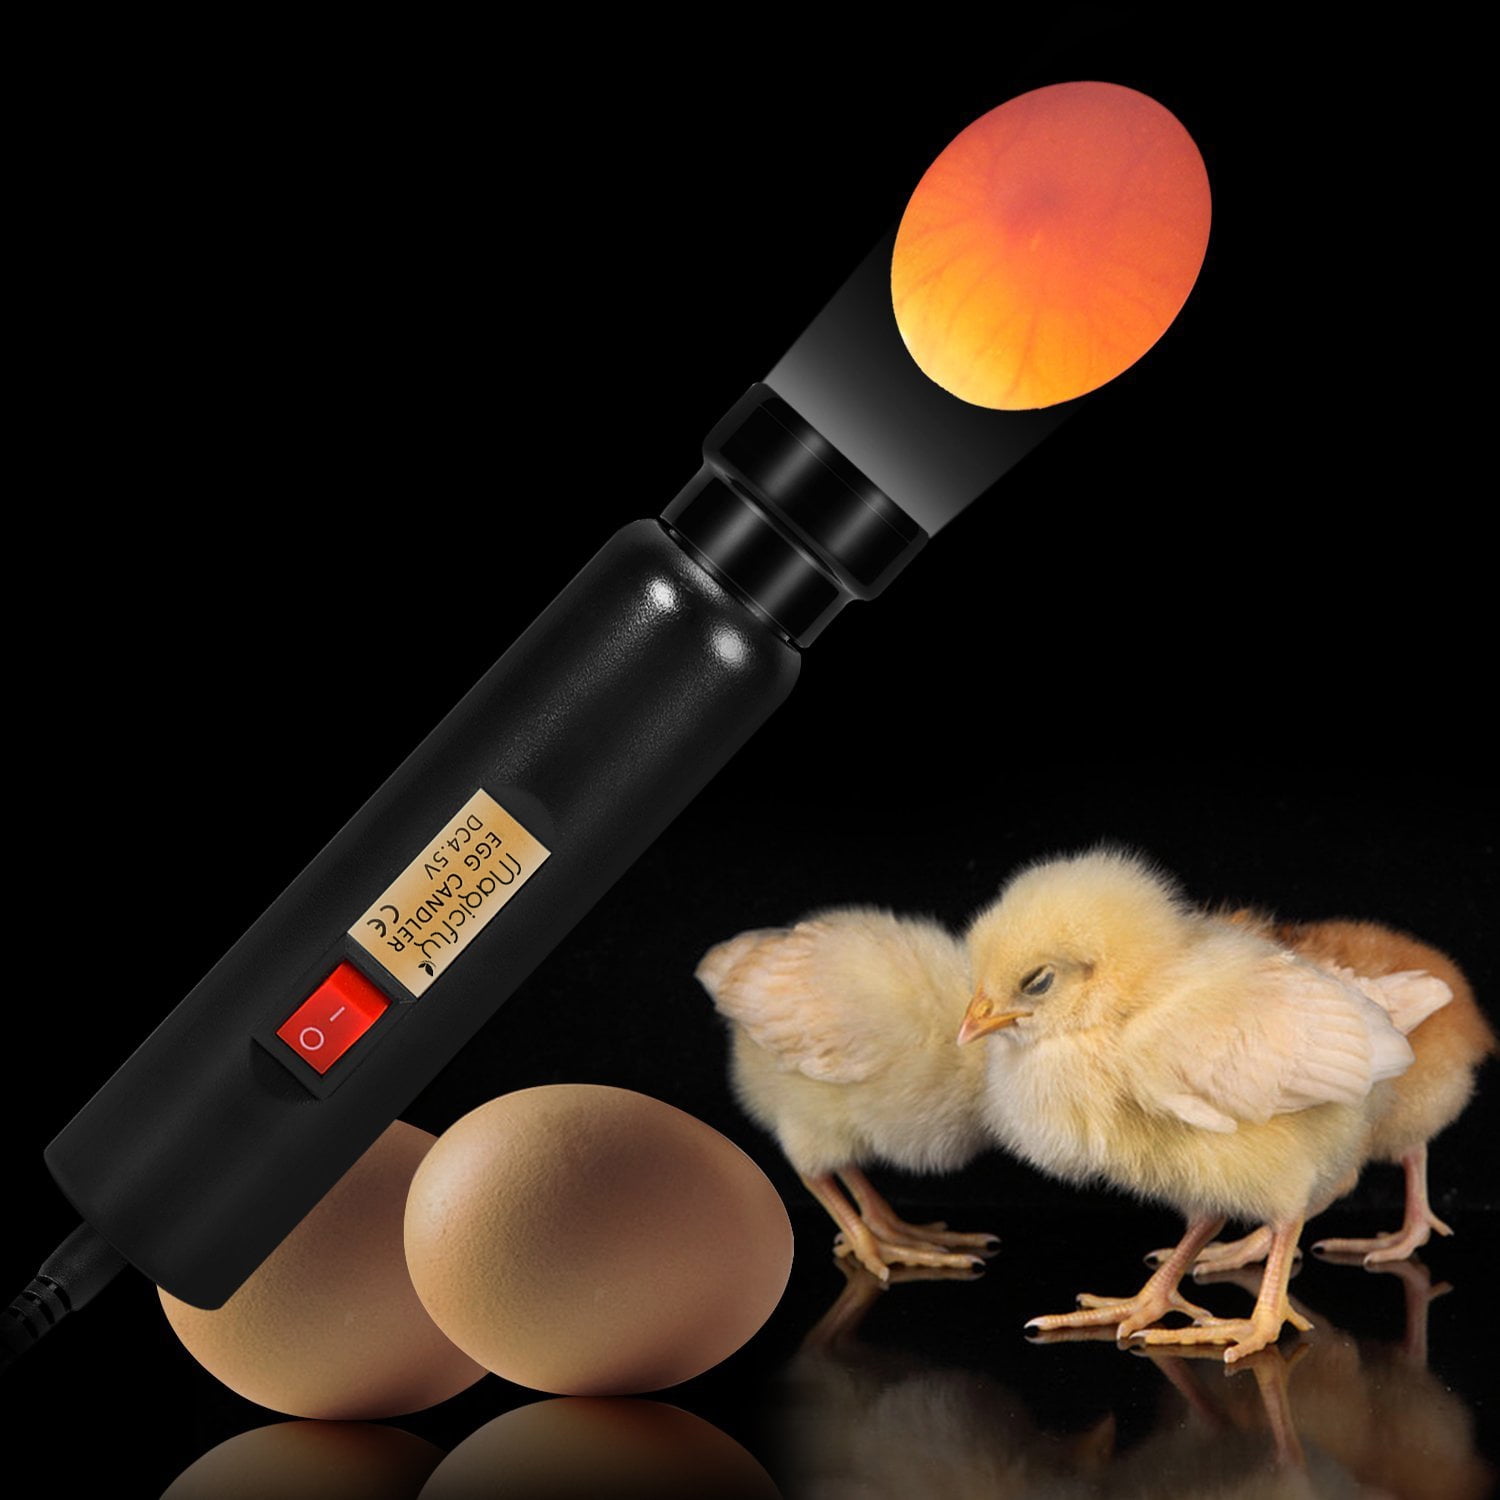 LED Light Egg Candler Tester, Egg Candling Lamp for Monitoring and Hatching Eggs